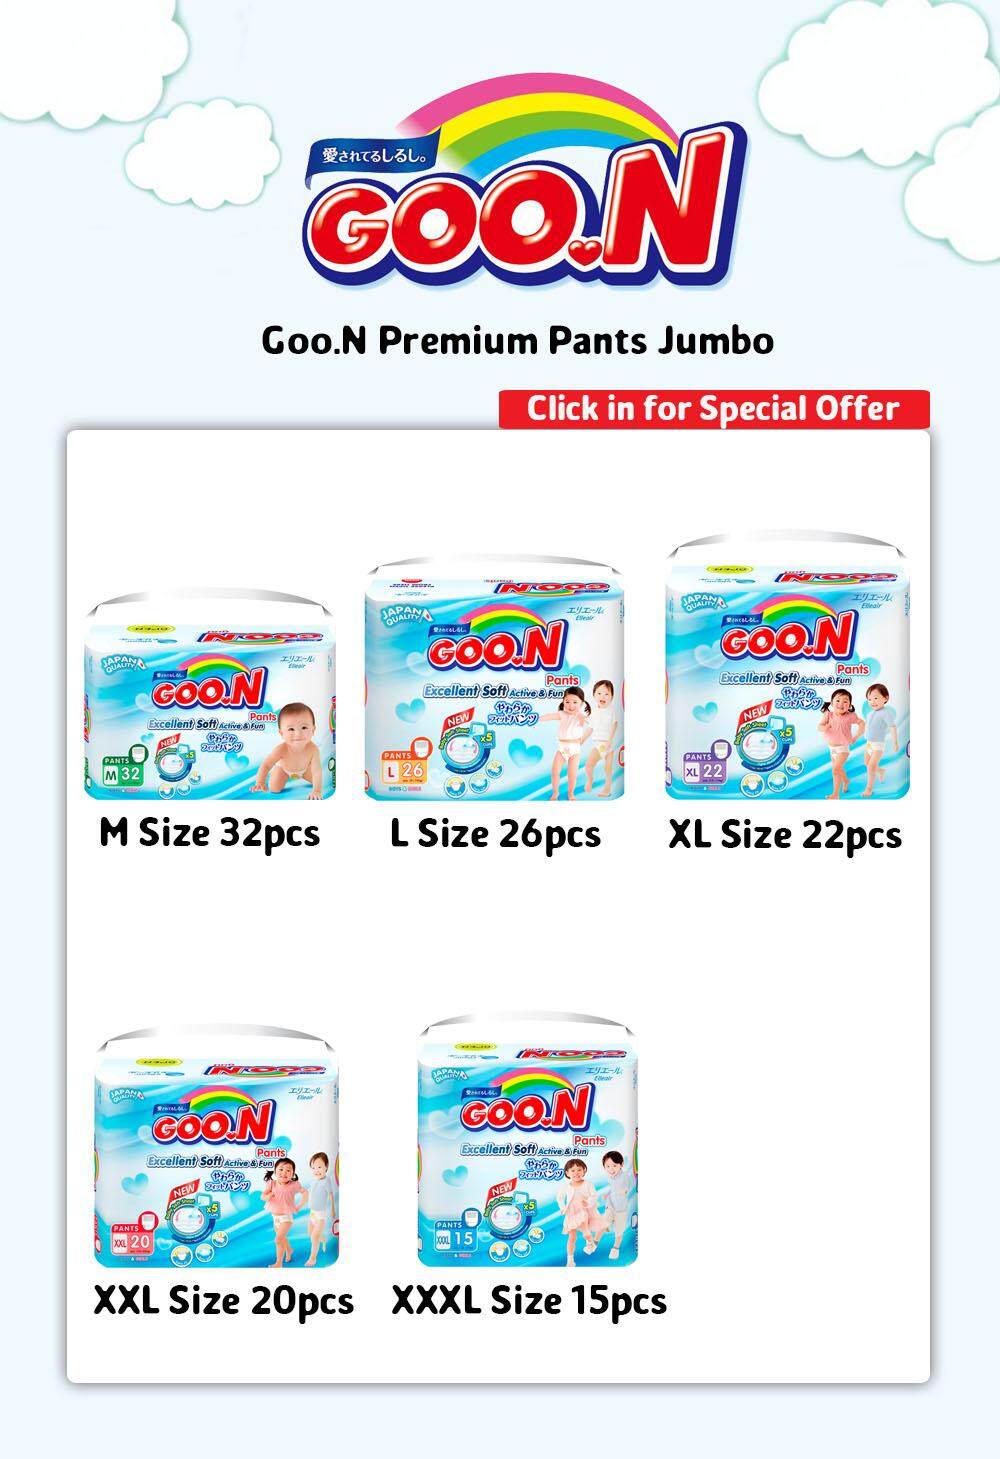 GooN Premium Pants Jumbo Description 1.JPG